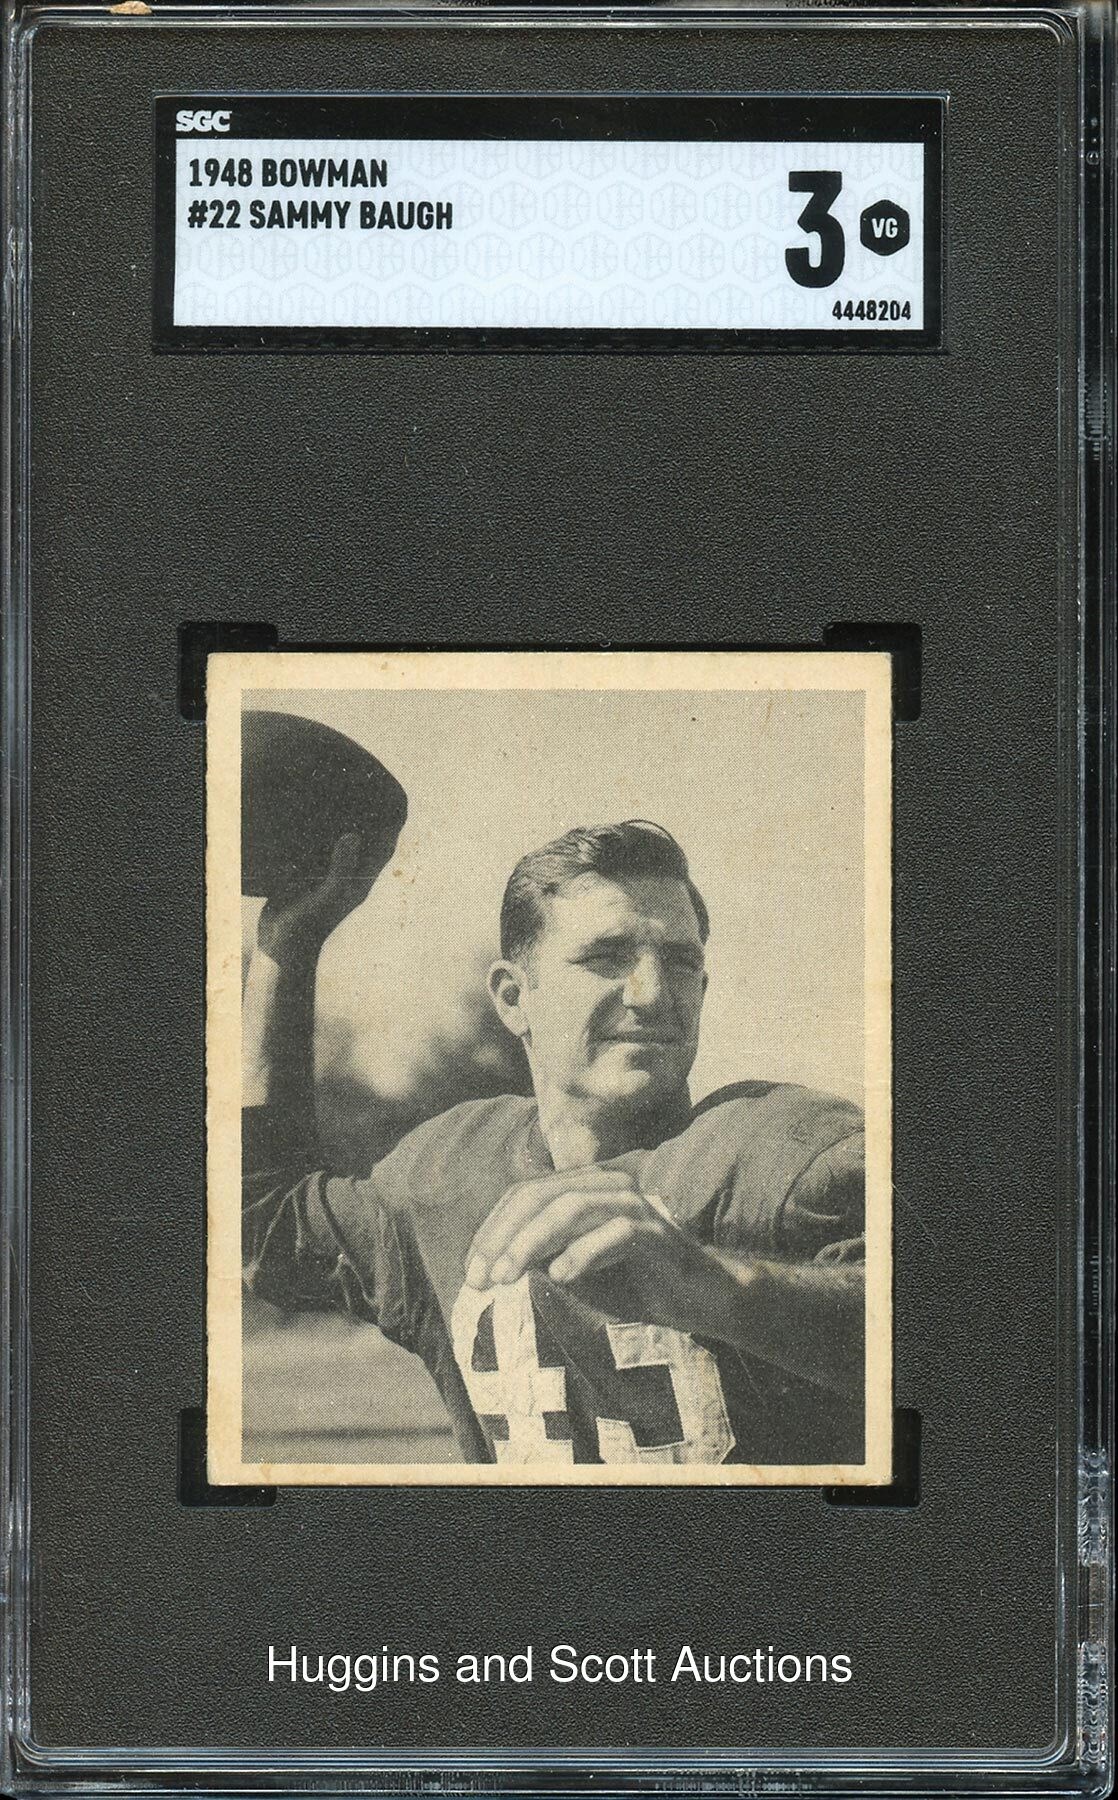 1948 Bowman Football #22 Sammy Baugh Rookie - SGC 3 VG